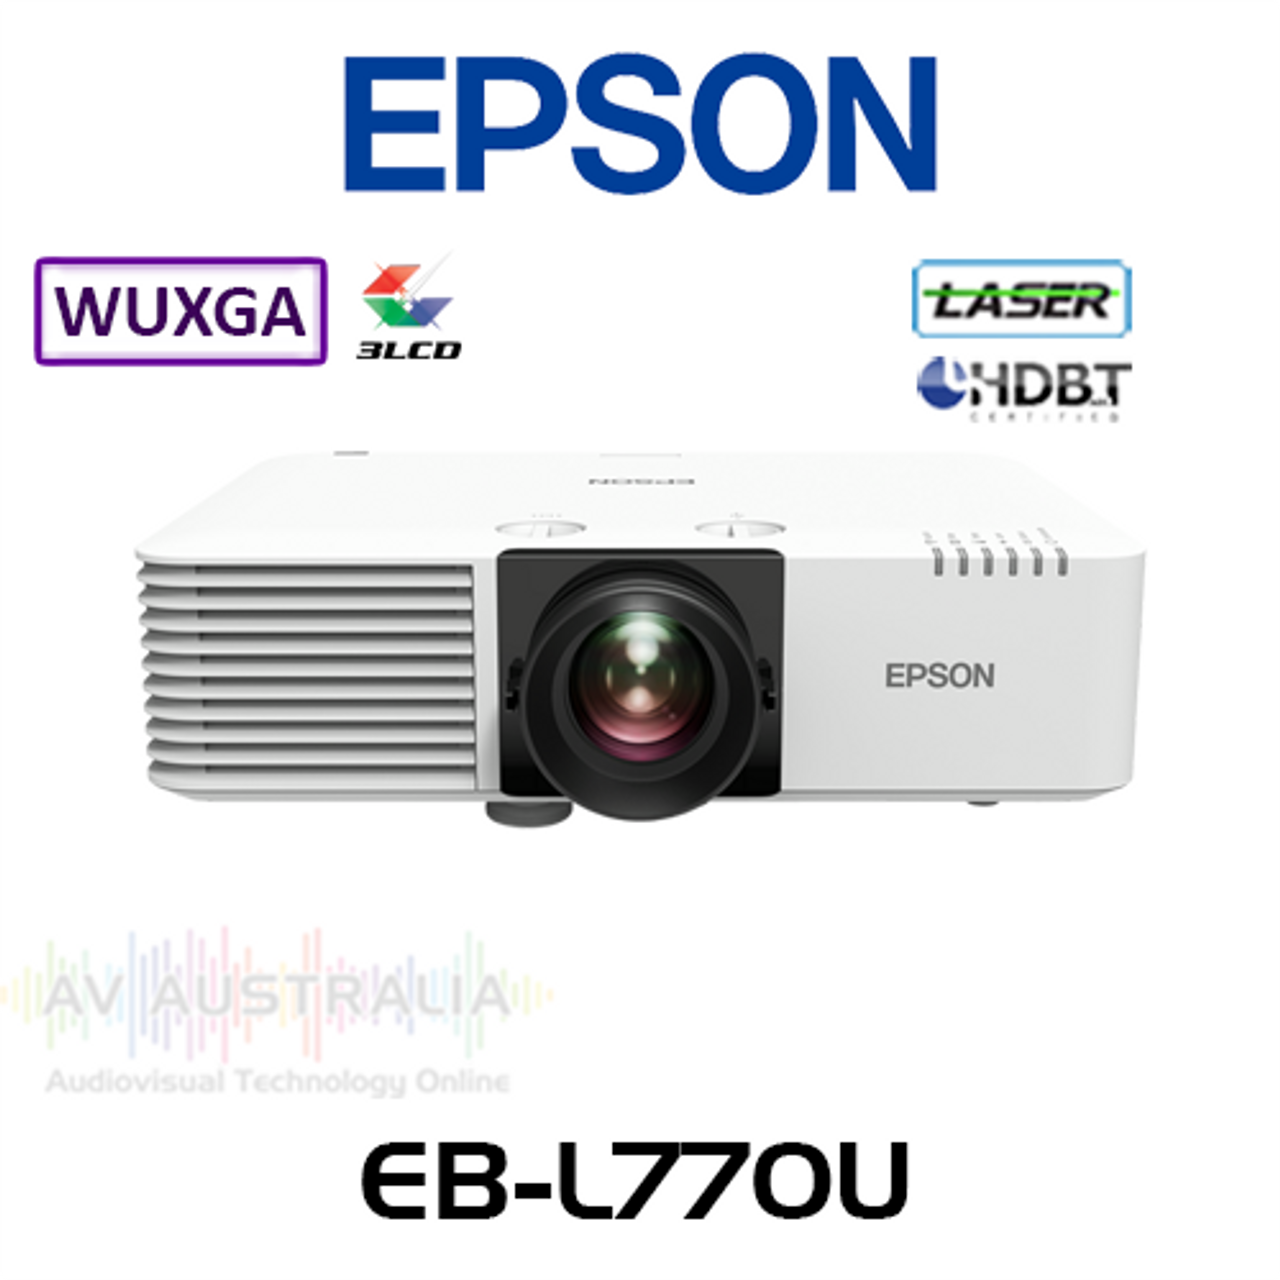 Epson EB-L770U WUXGA 4K Enhancement 7000 Lumen HDBaseT Installation Laser Projector